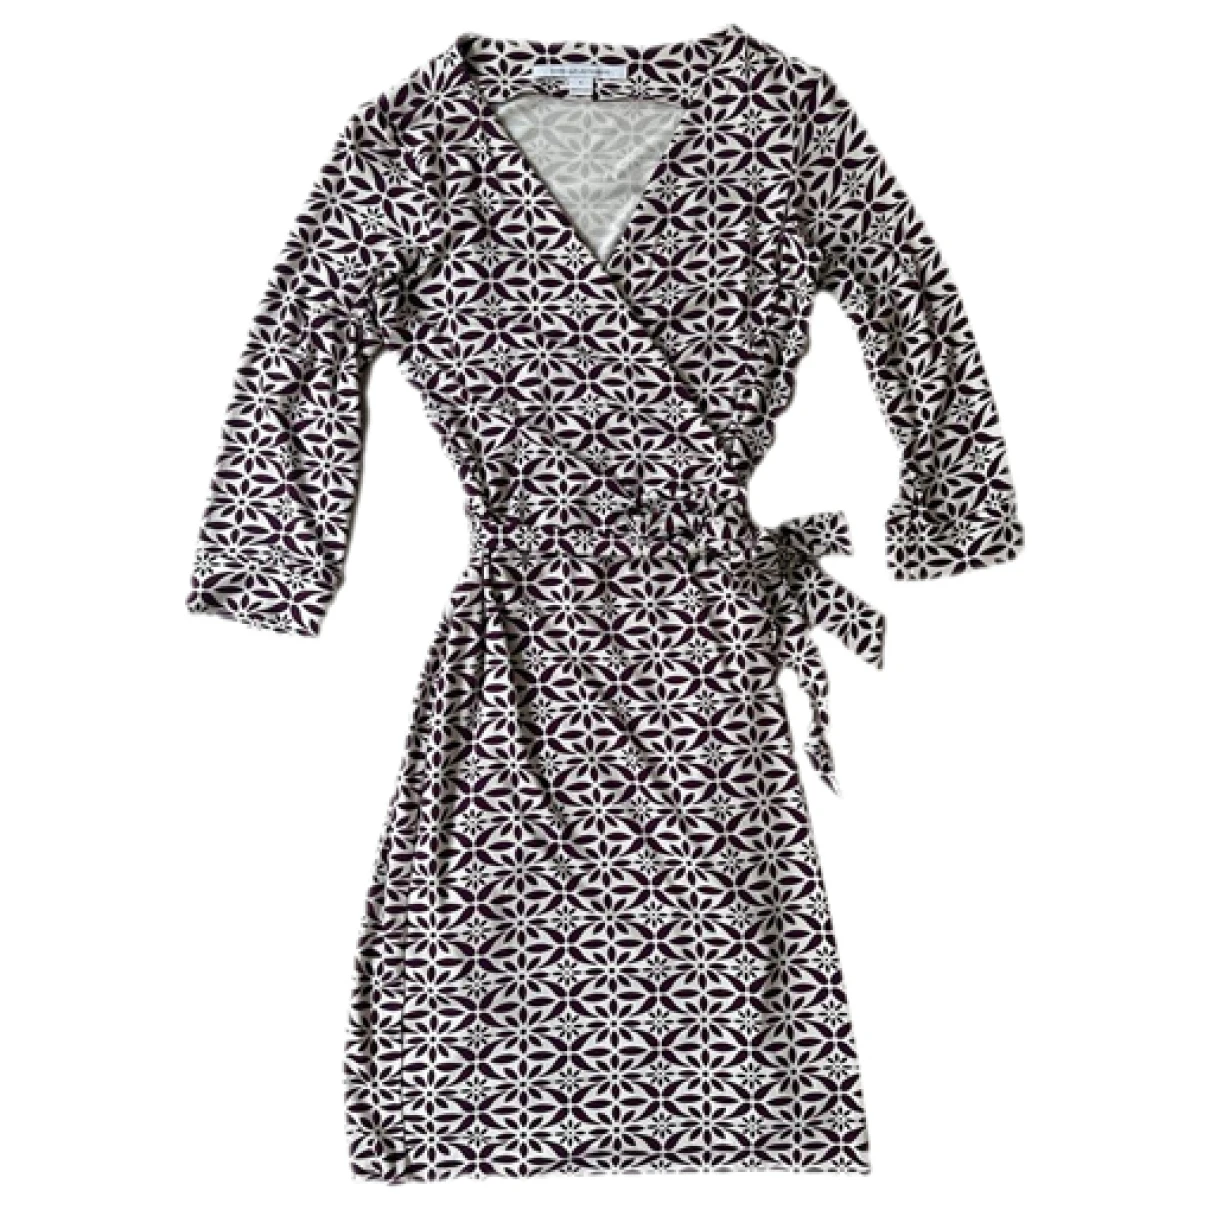 Pre-owned Diane Von Furstenberg Mini Dress In Purple